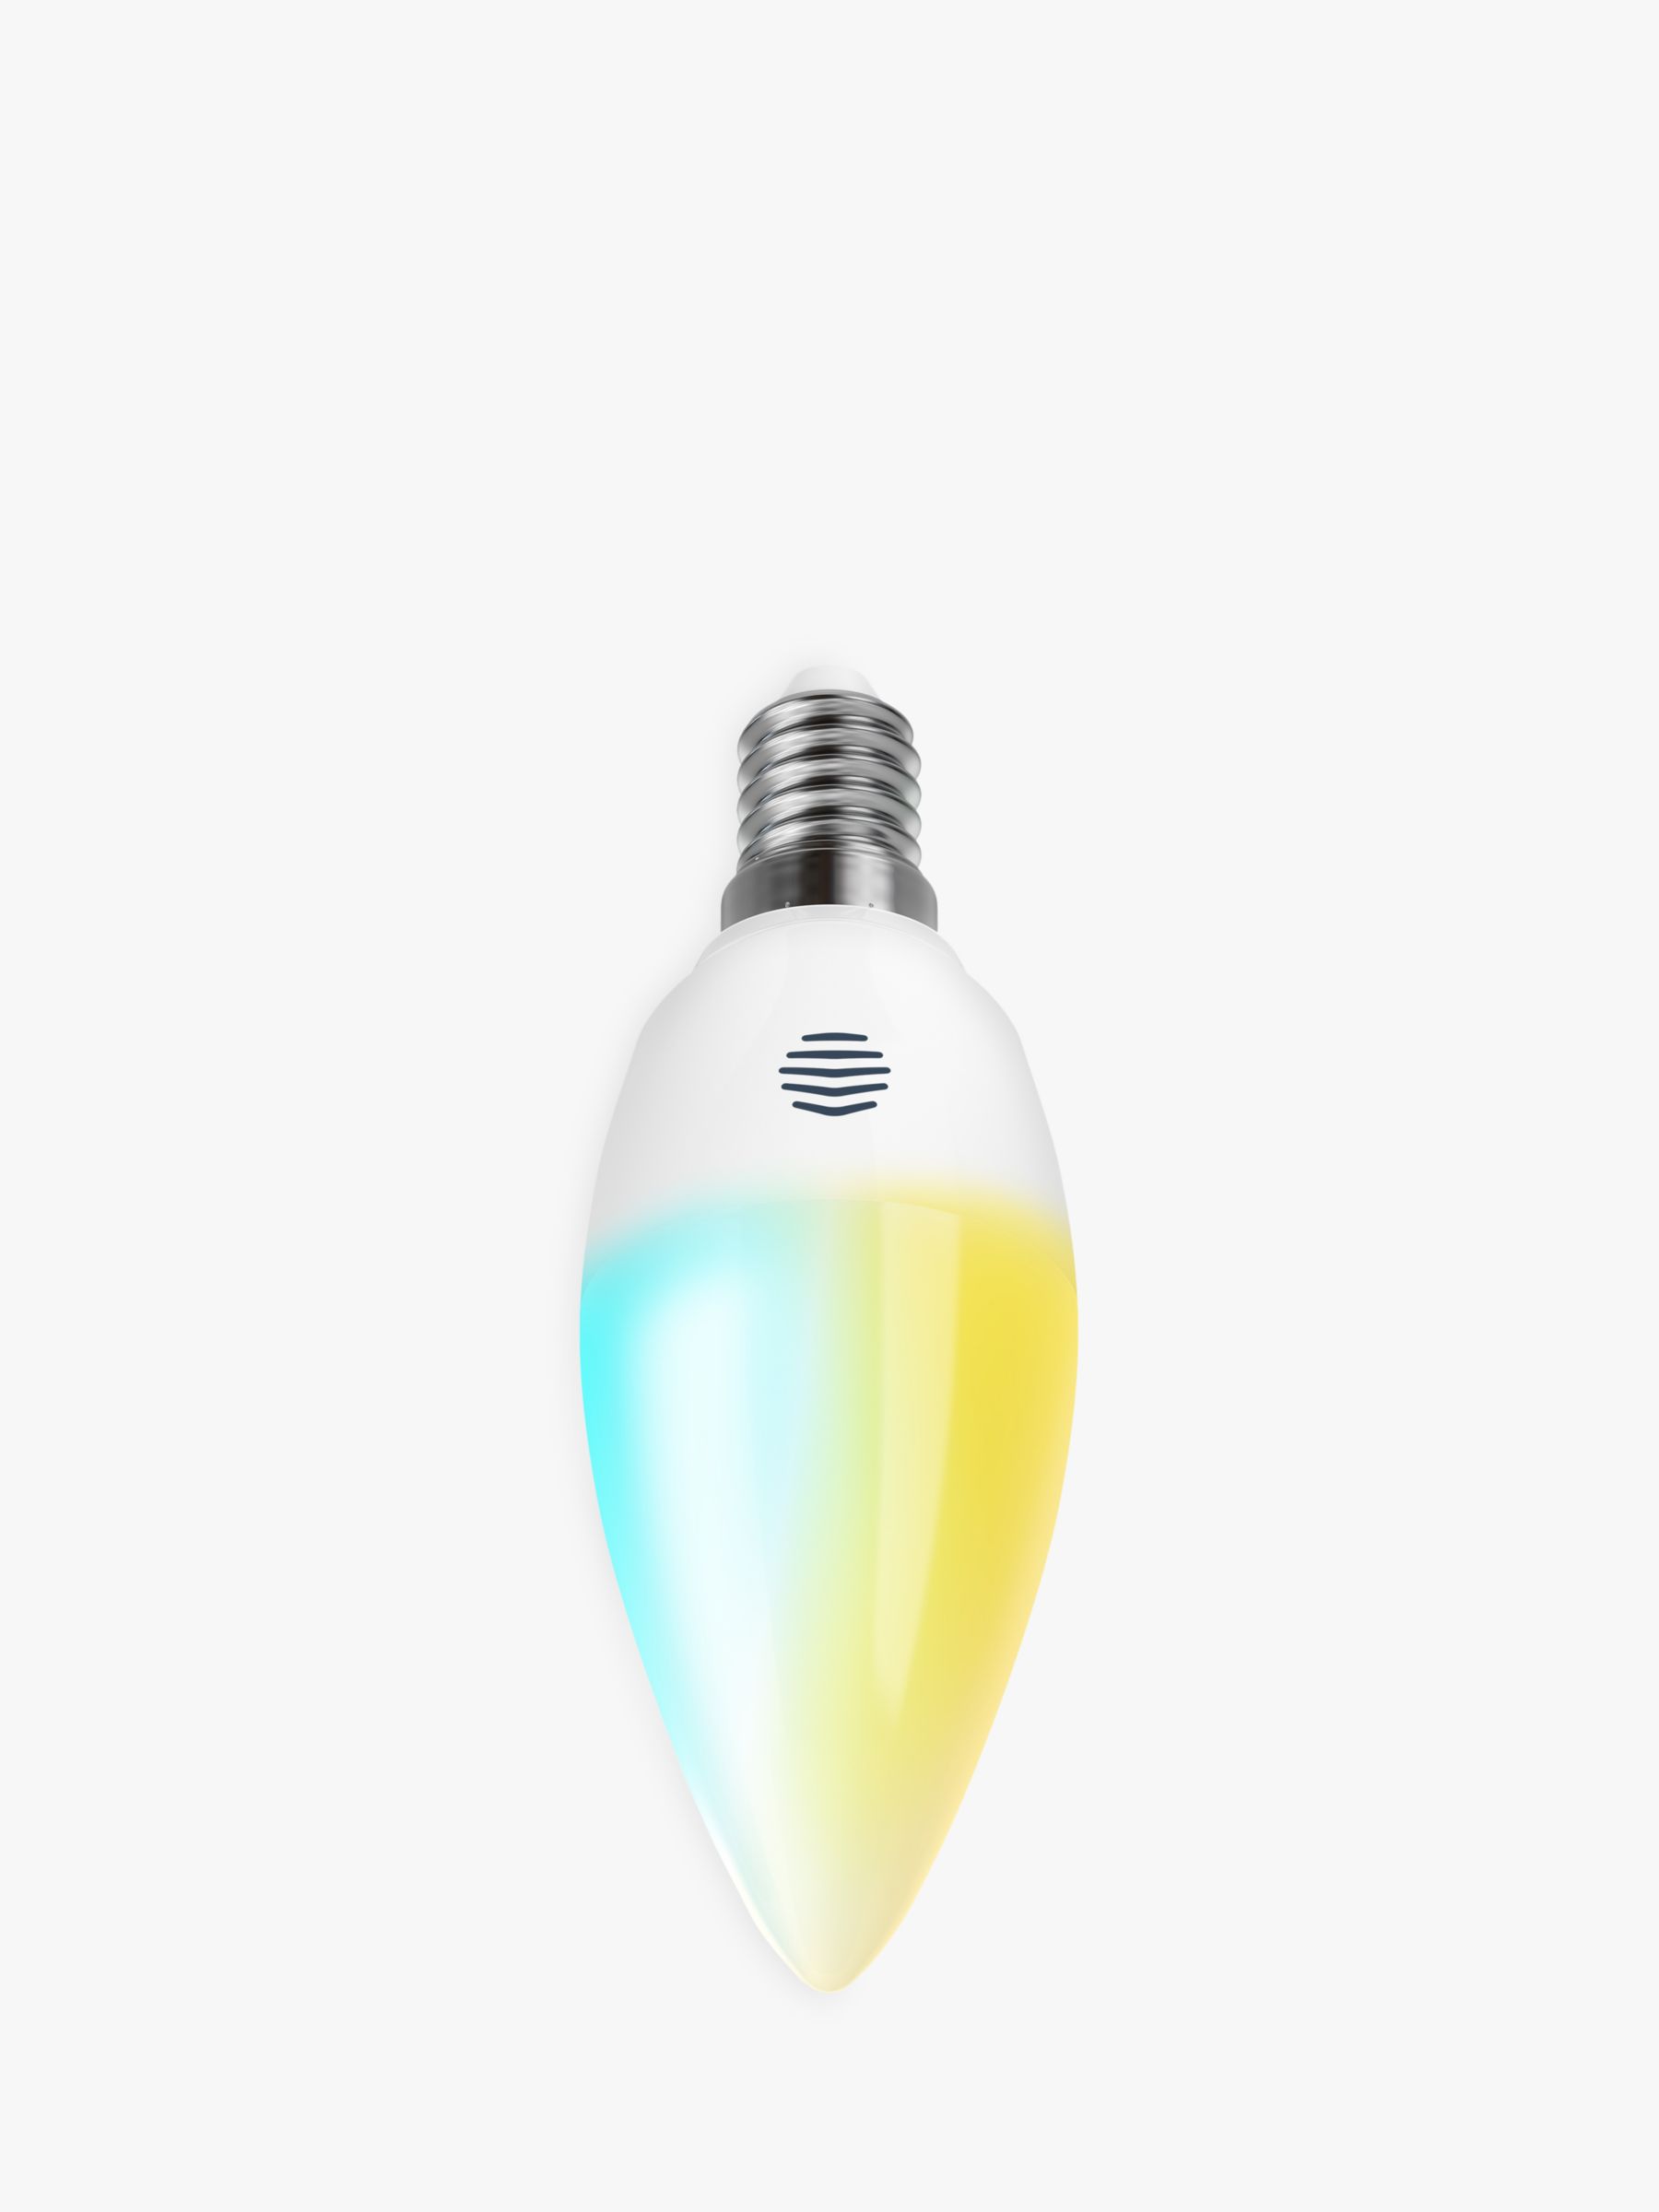 Photo of Hive active light cool to warm white wireless lighting led light bulb 5.8w e14 bulb single